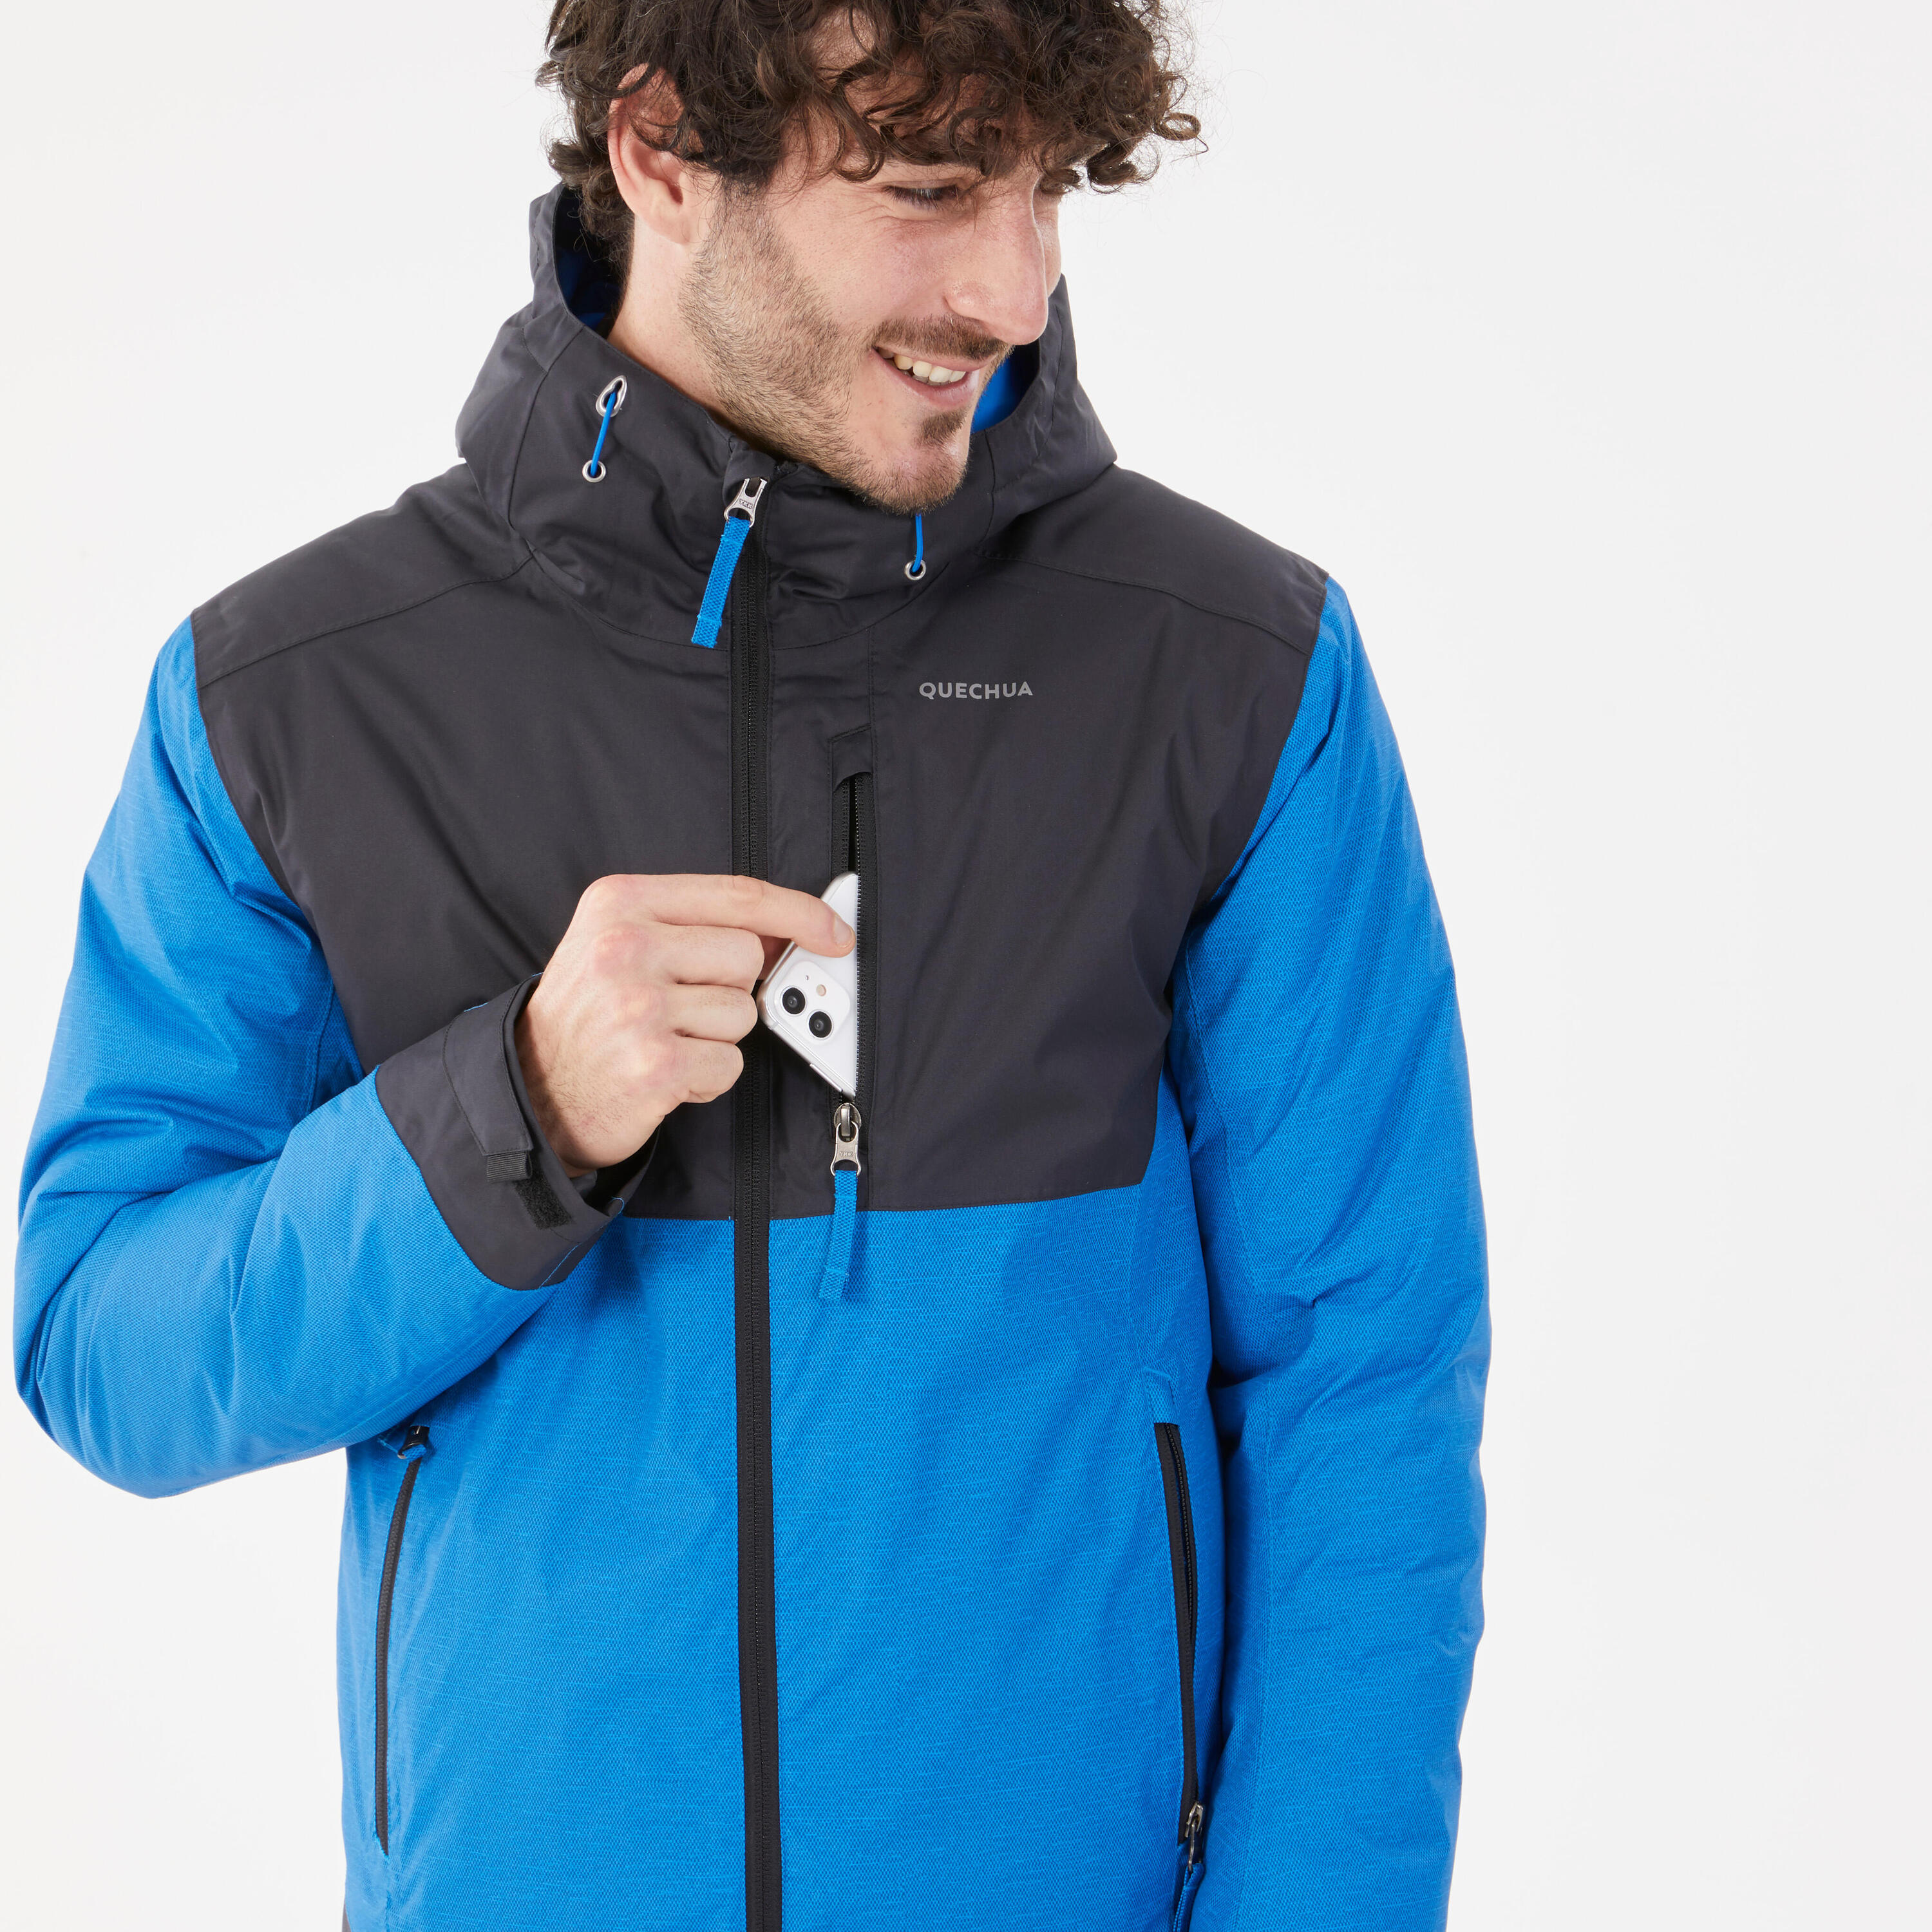 Men’s hiking waterproof winter jacket - SH500 -10°C 5/9